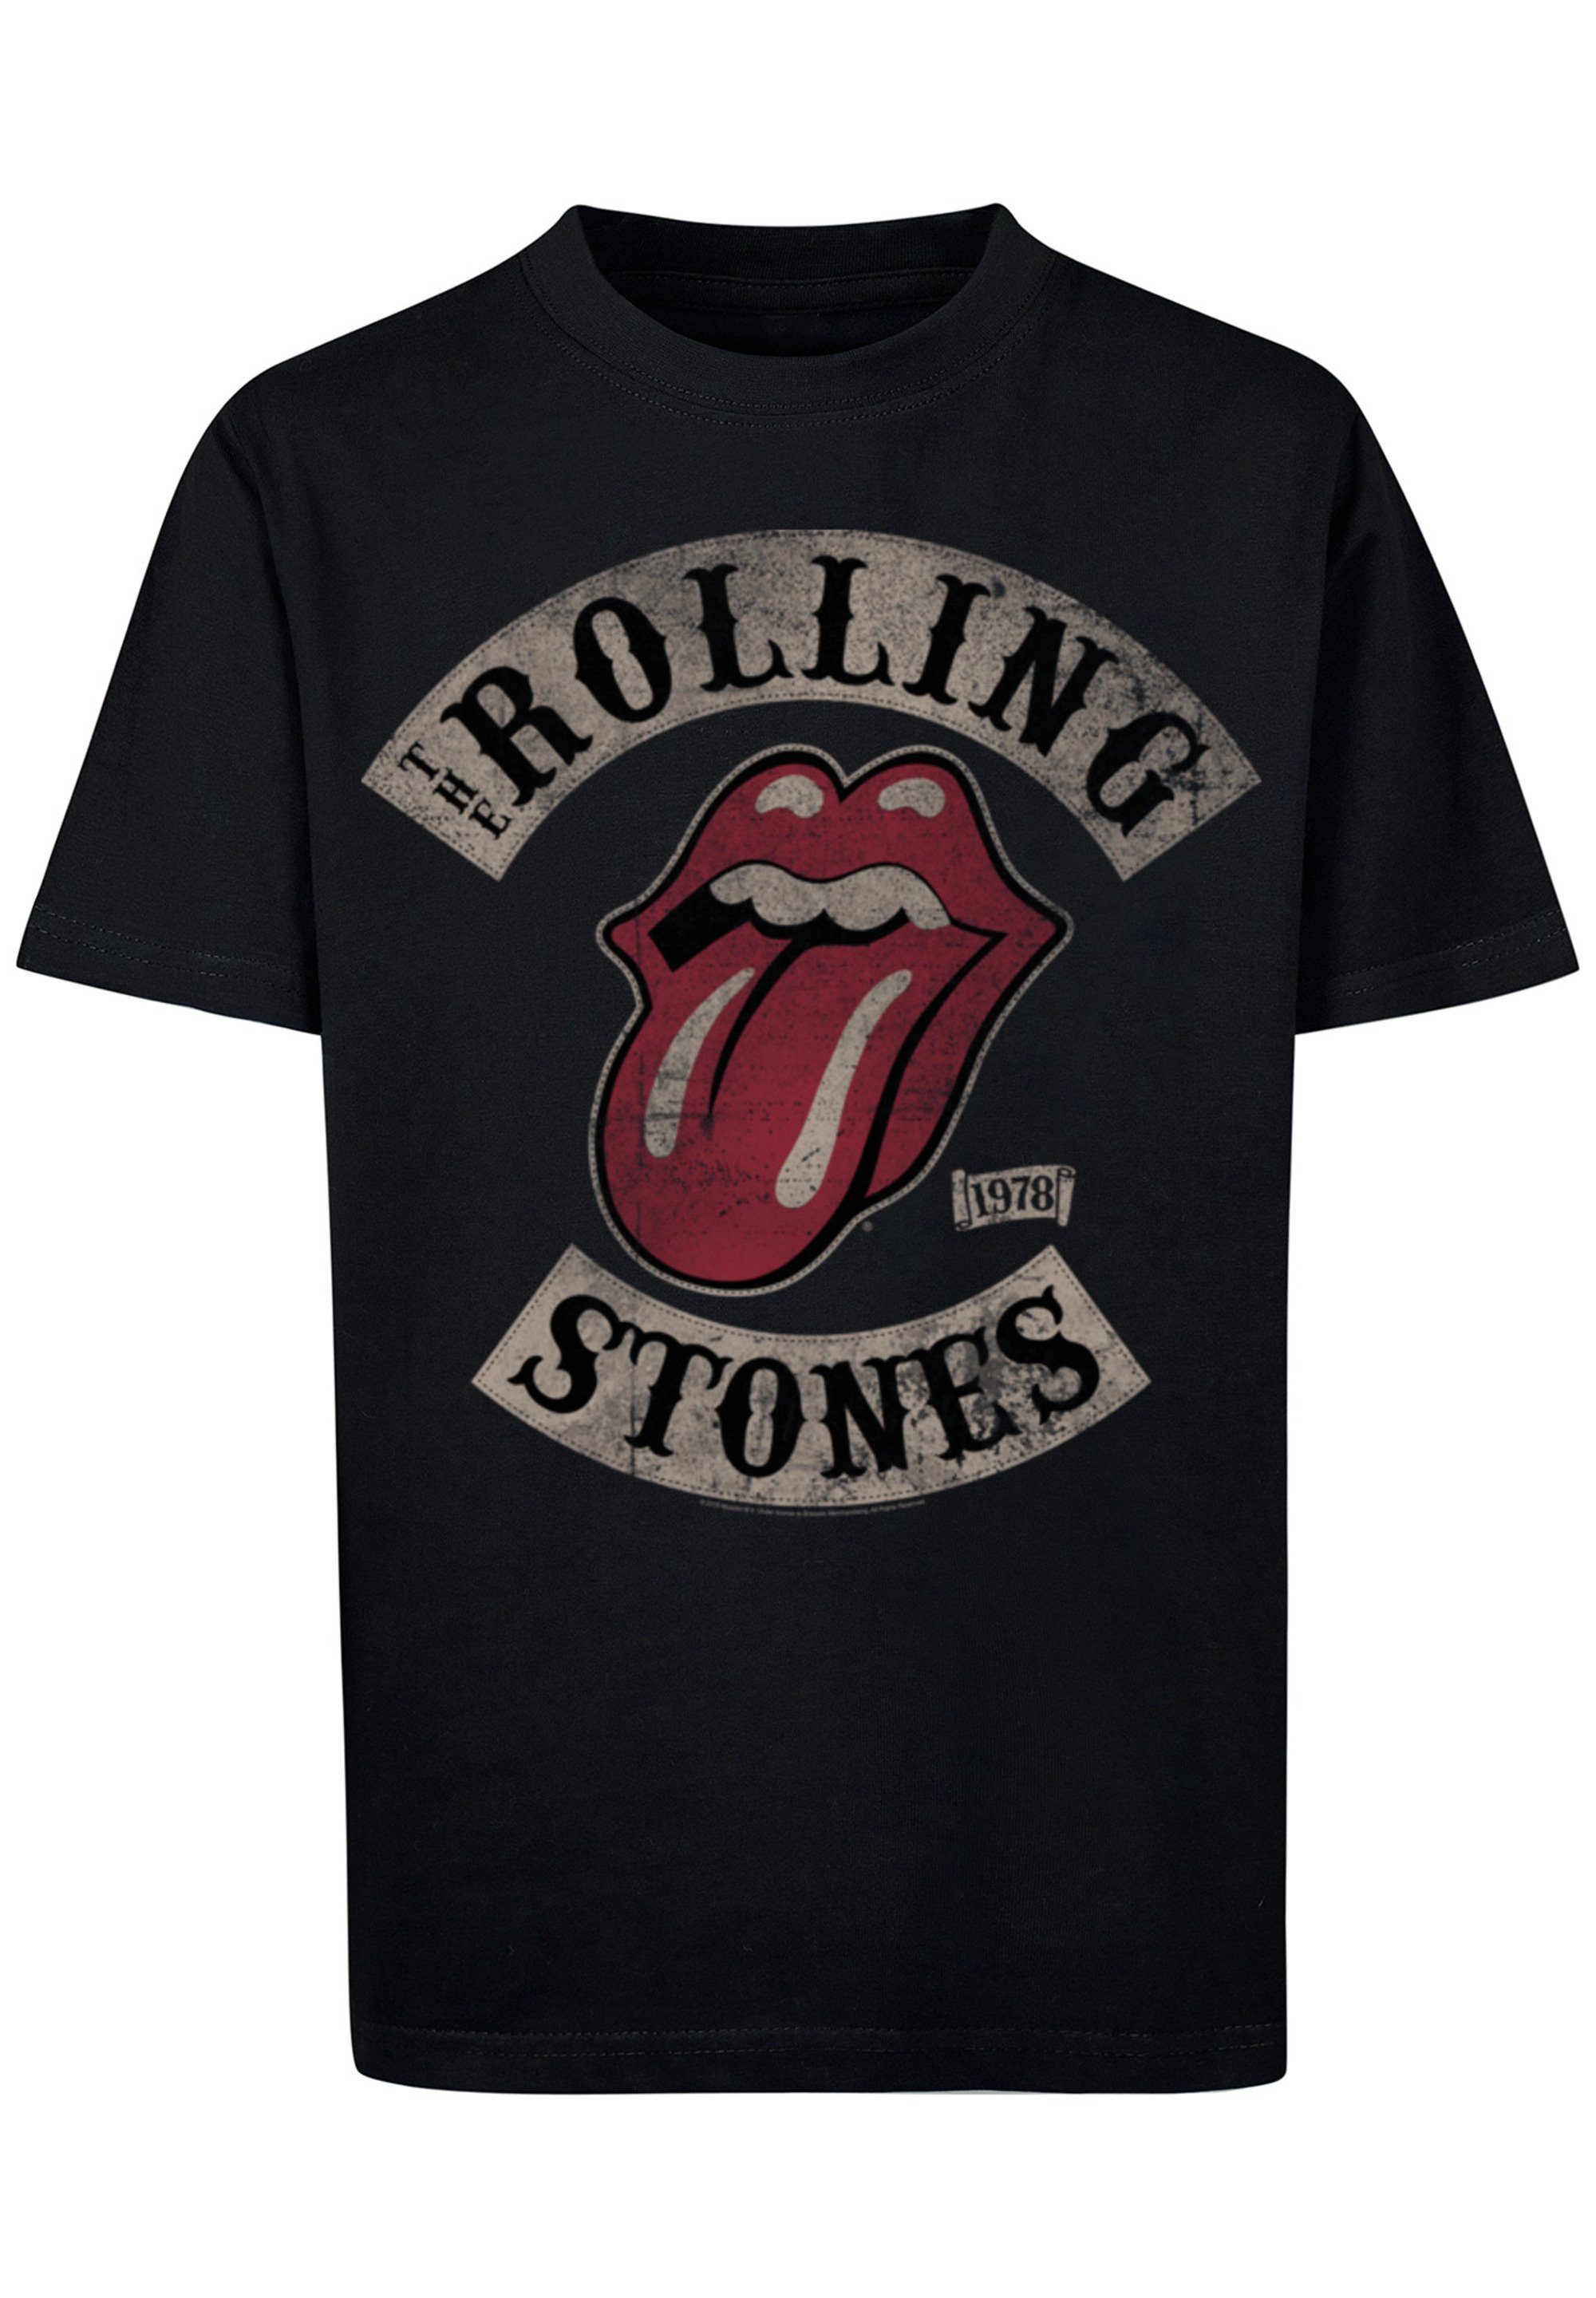 F4NT4STIC T-Shirt The Rolling Stones Rockband Tour '78 Black Print, Sehr  weicher Baumwollstoff mit hohem Tragekomfort